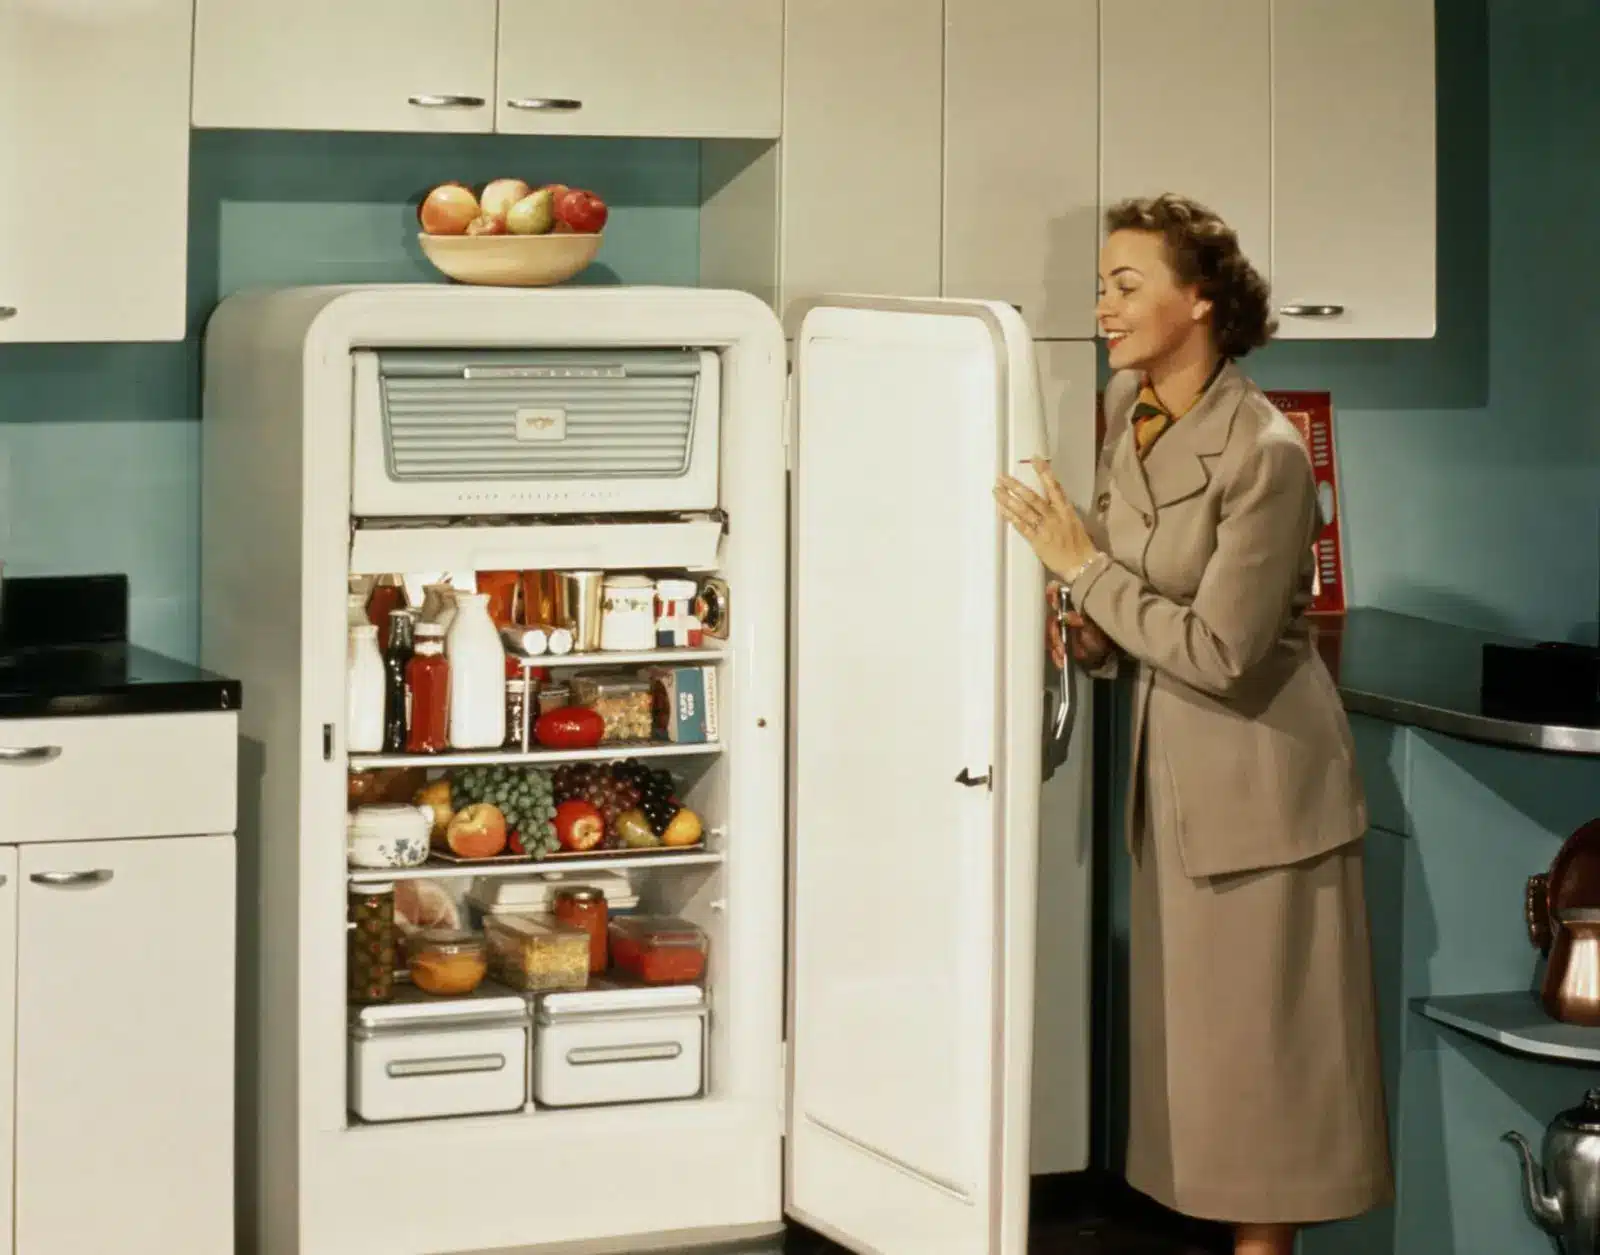 Voce sabe o que e tecnologia inverter das geladeiras